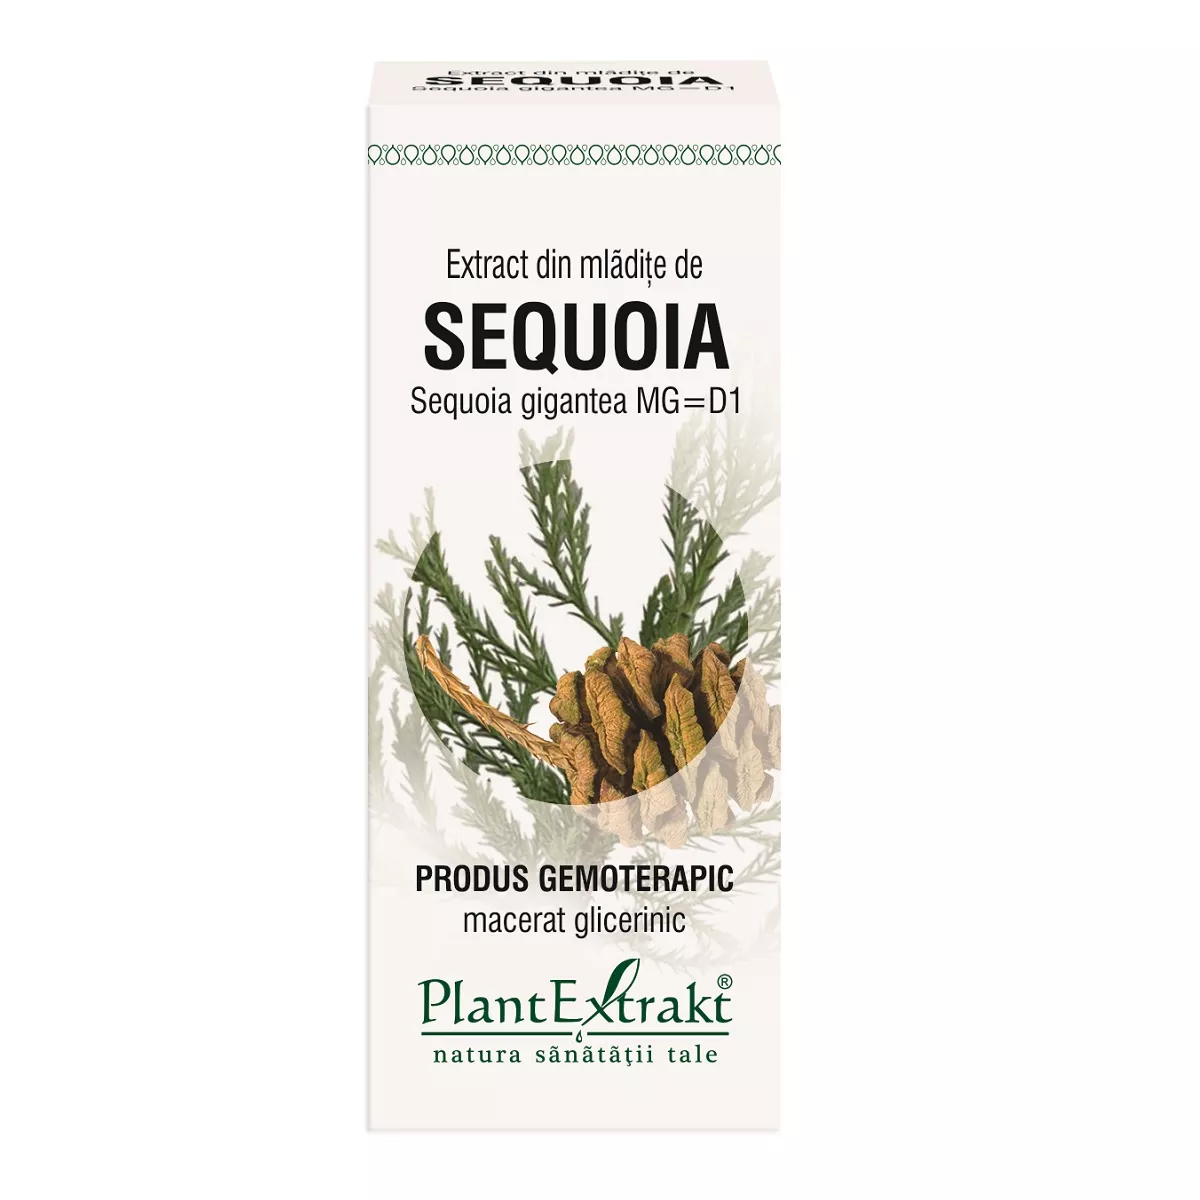 Extract din mladite de sequoia, 50 ml, Plantextrakt, [],remediumfarm.ro